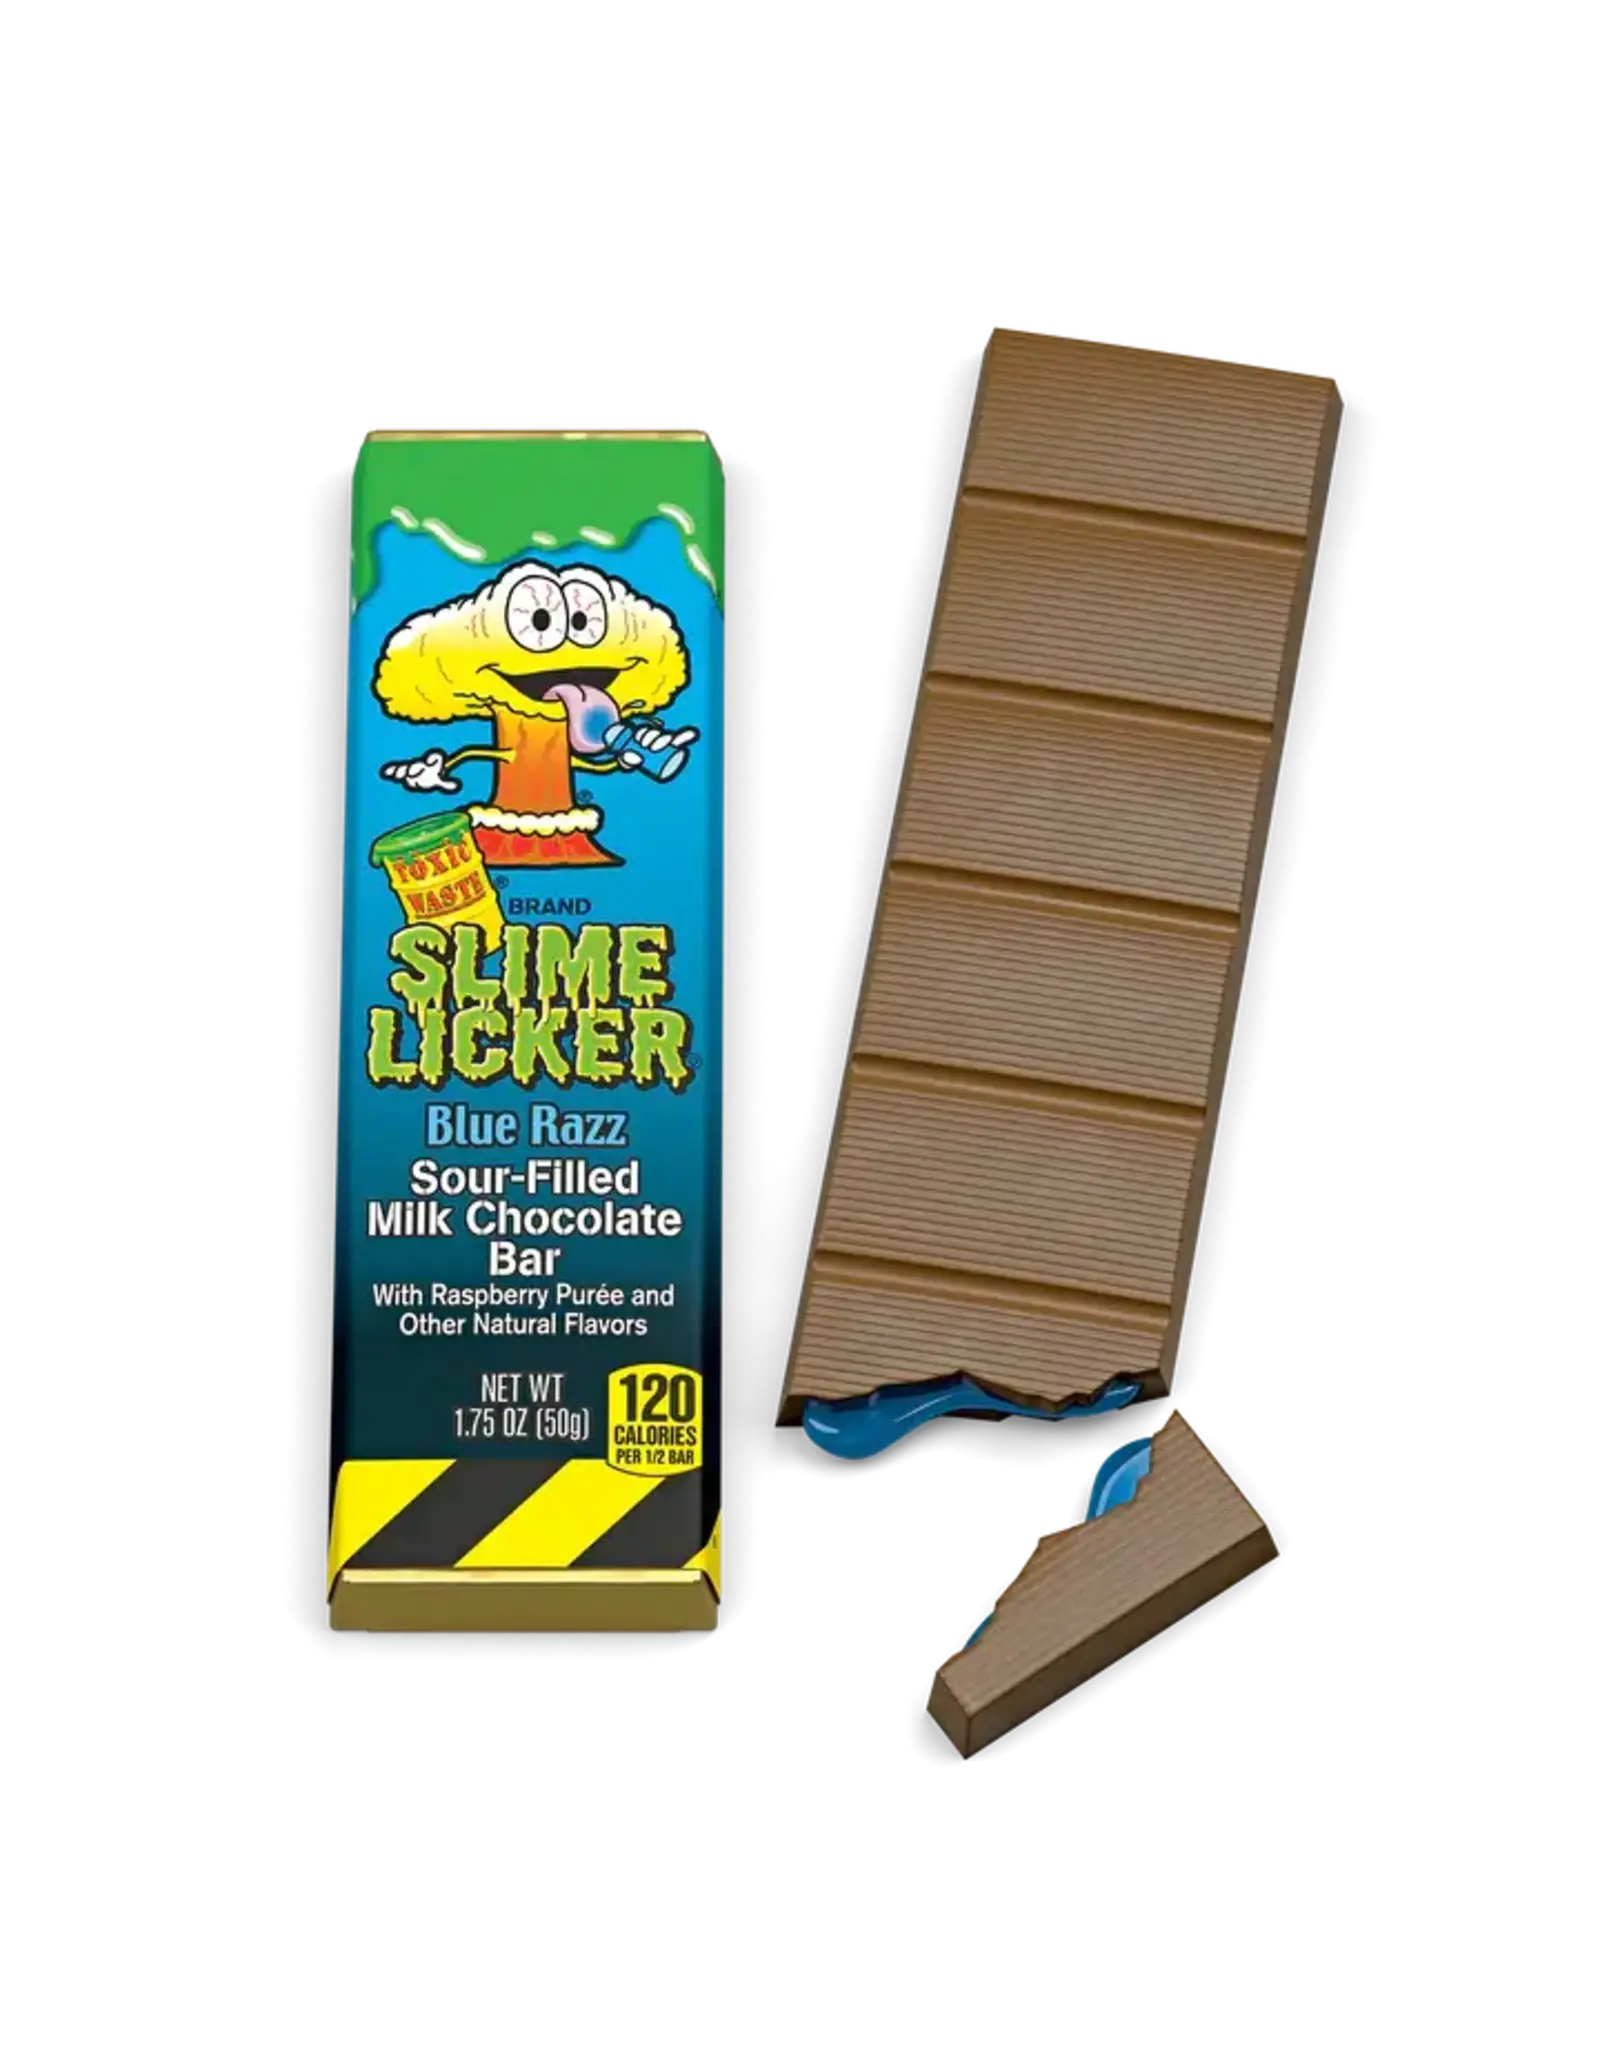 Toxic Waste Slime Licker Chocolate Bar Blue Razz